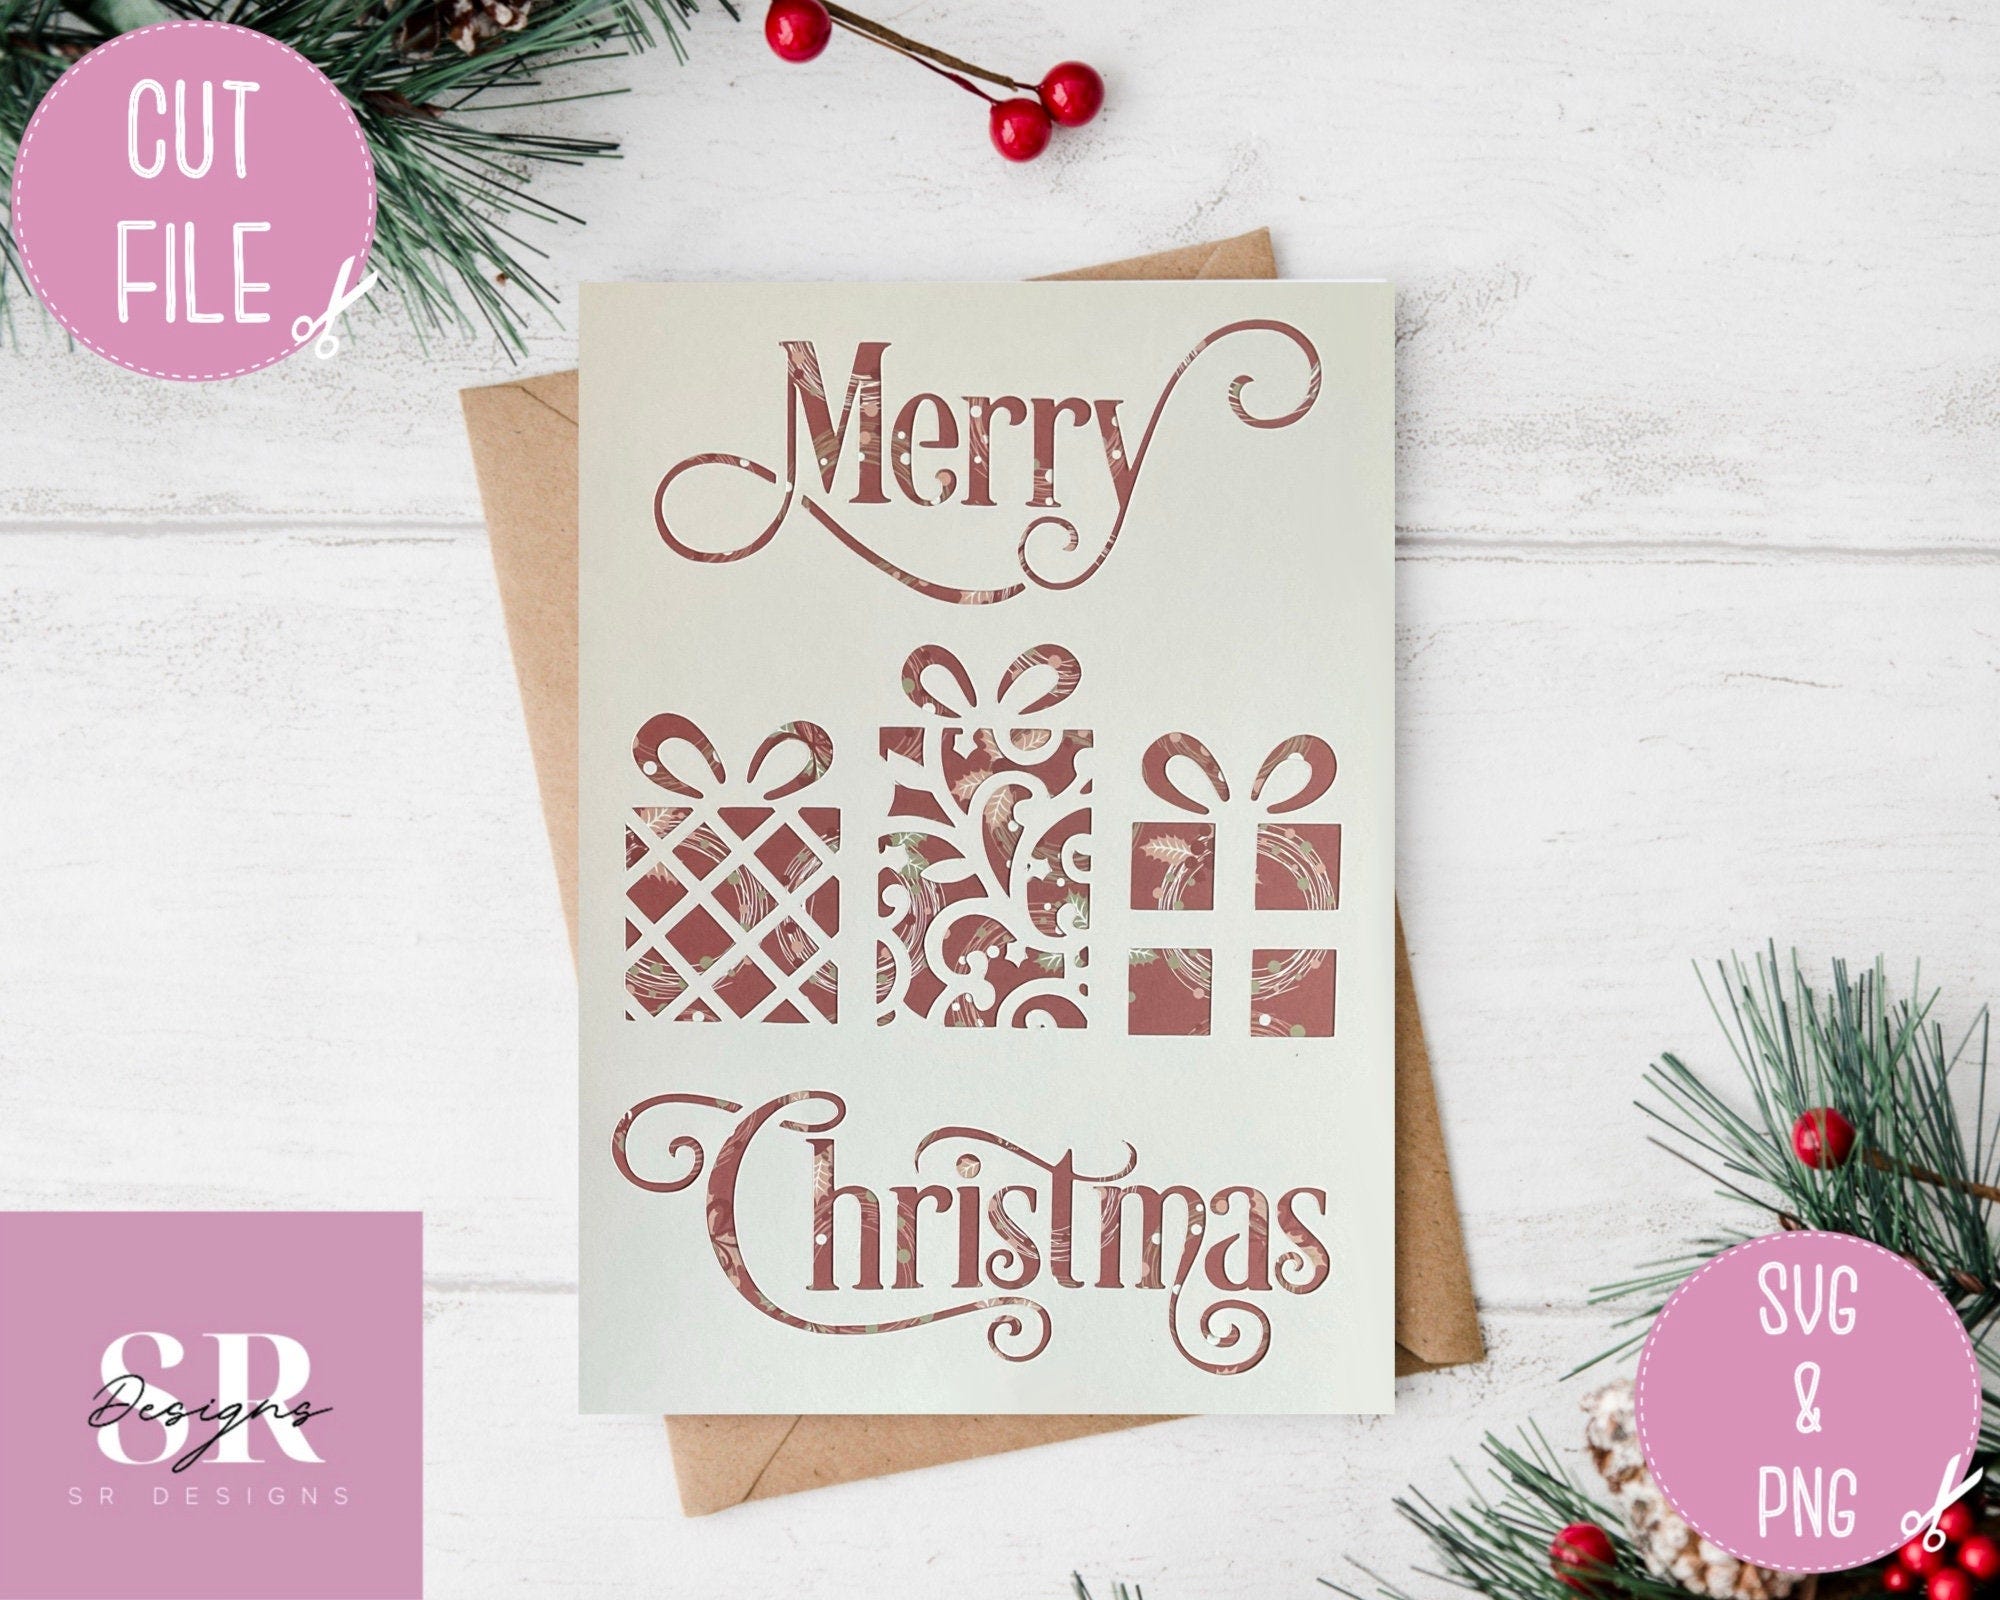 SVG: Christmas card. Christmas card svg. Merry Christmas svg. Cricut card svg. Desire Christmas font. Christmas present card svg.